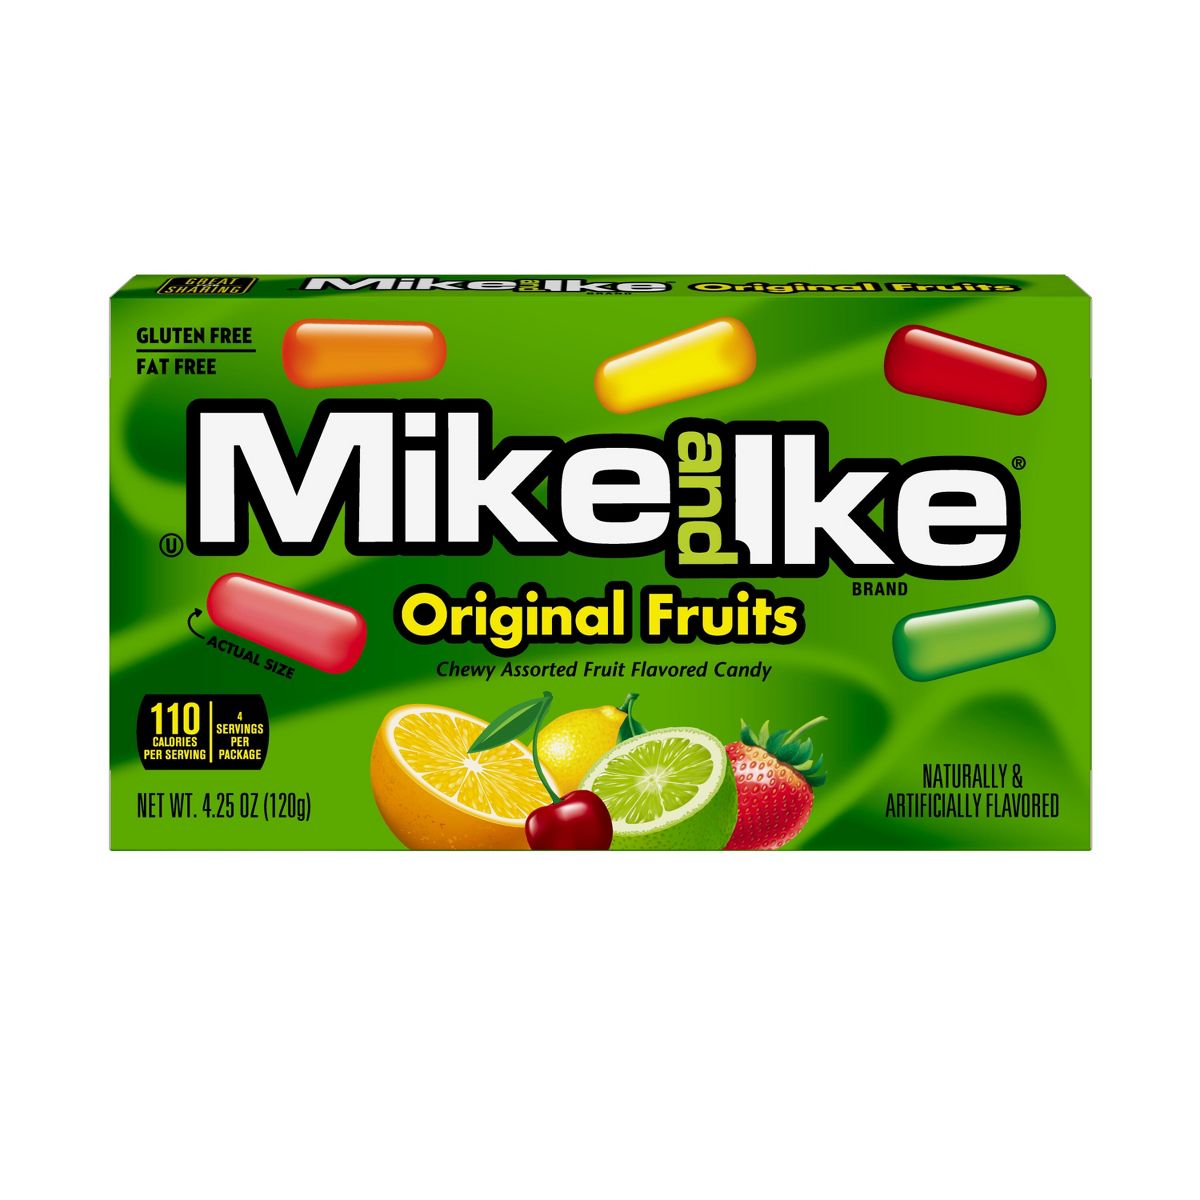 Mike & Ike Original Fruits 5 Oz Box